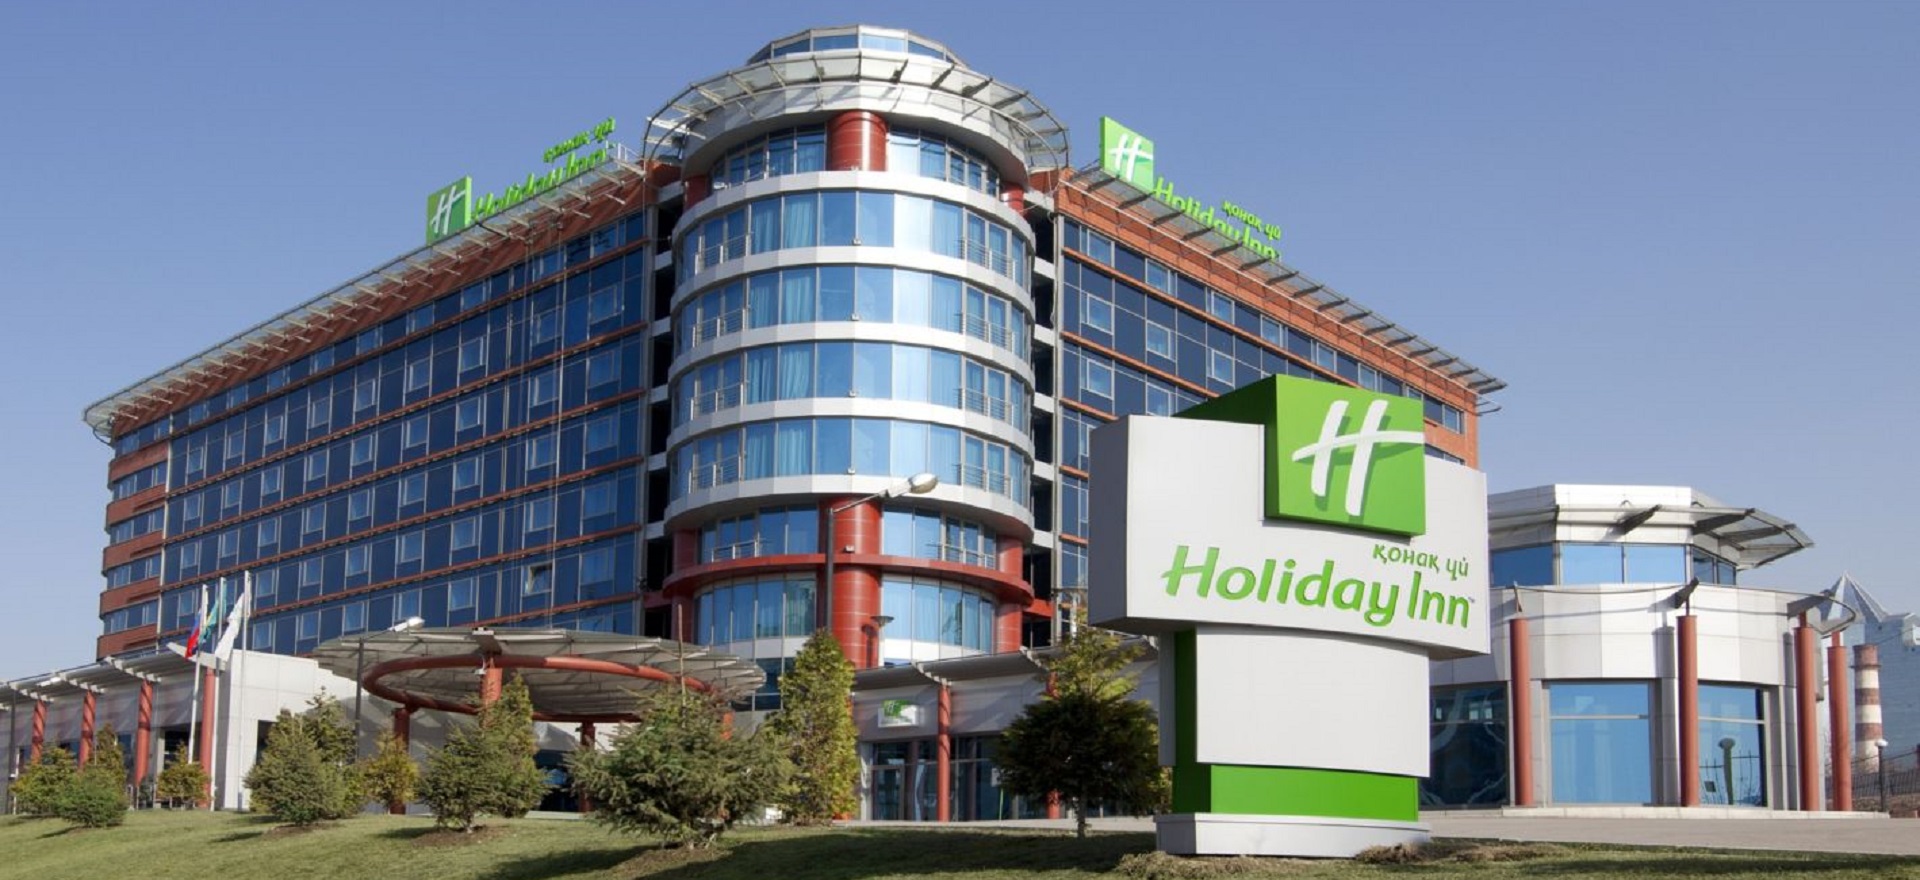 Website of the Holiday Inn Almaty Hotel